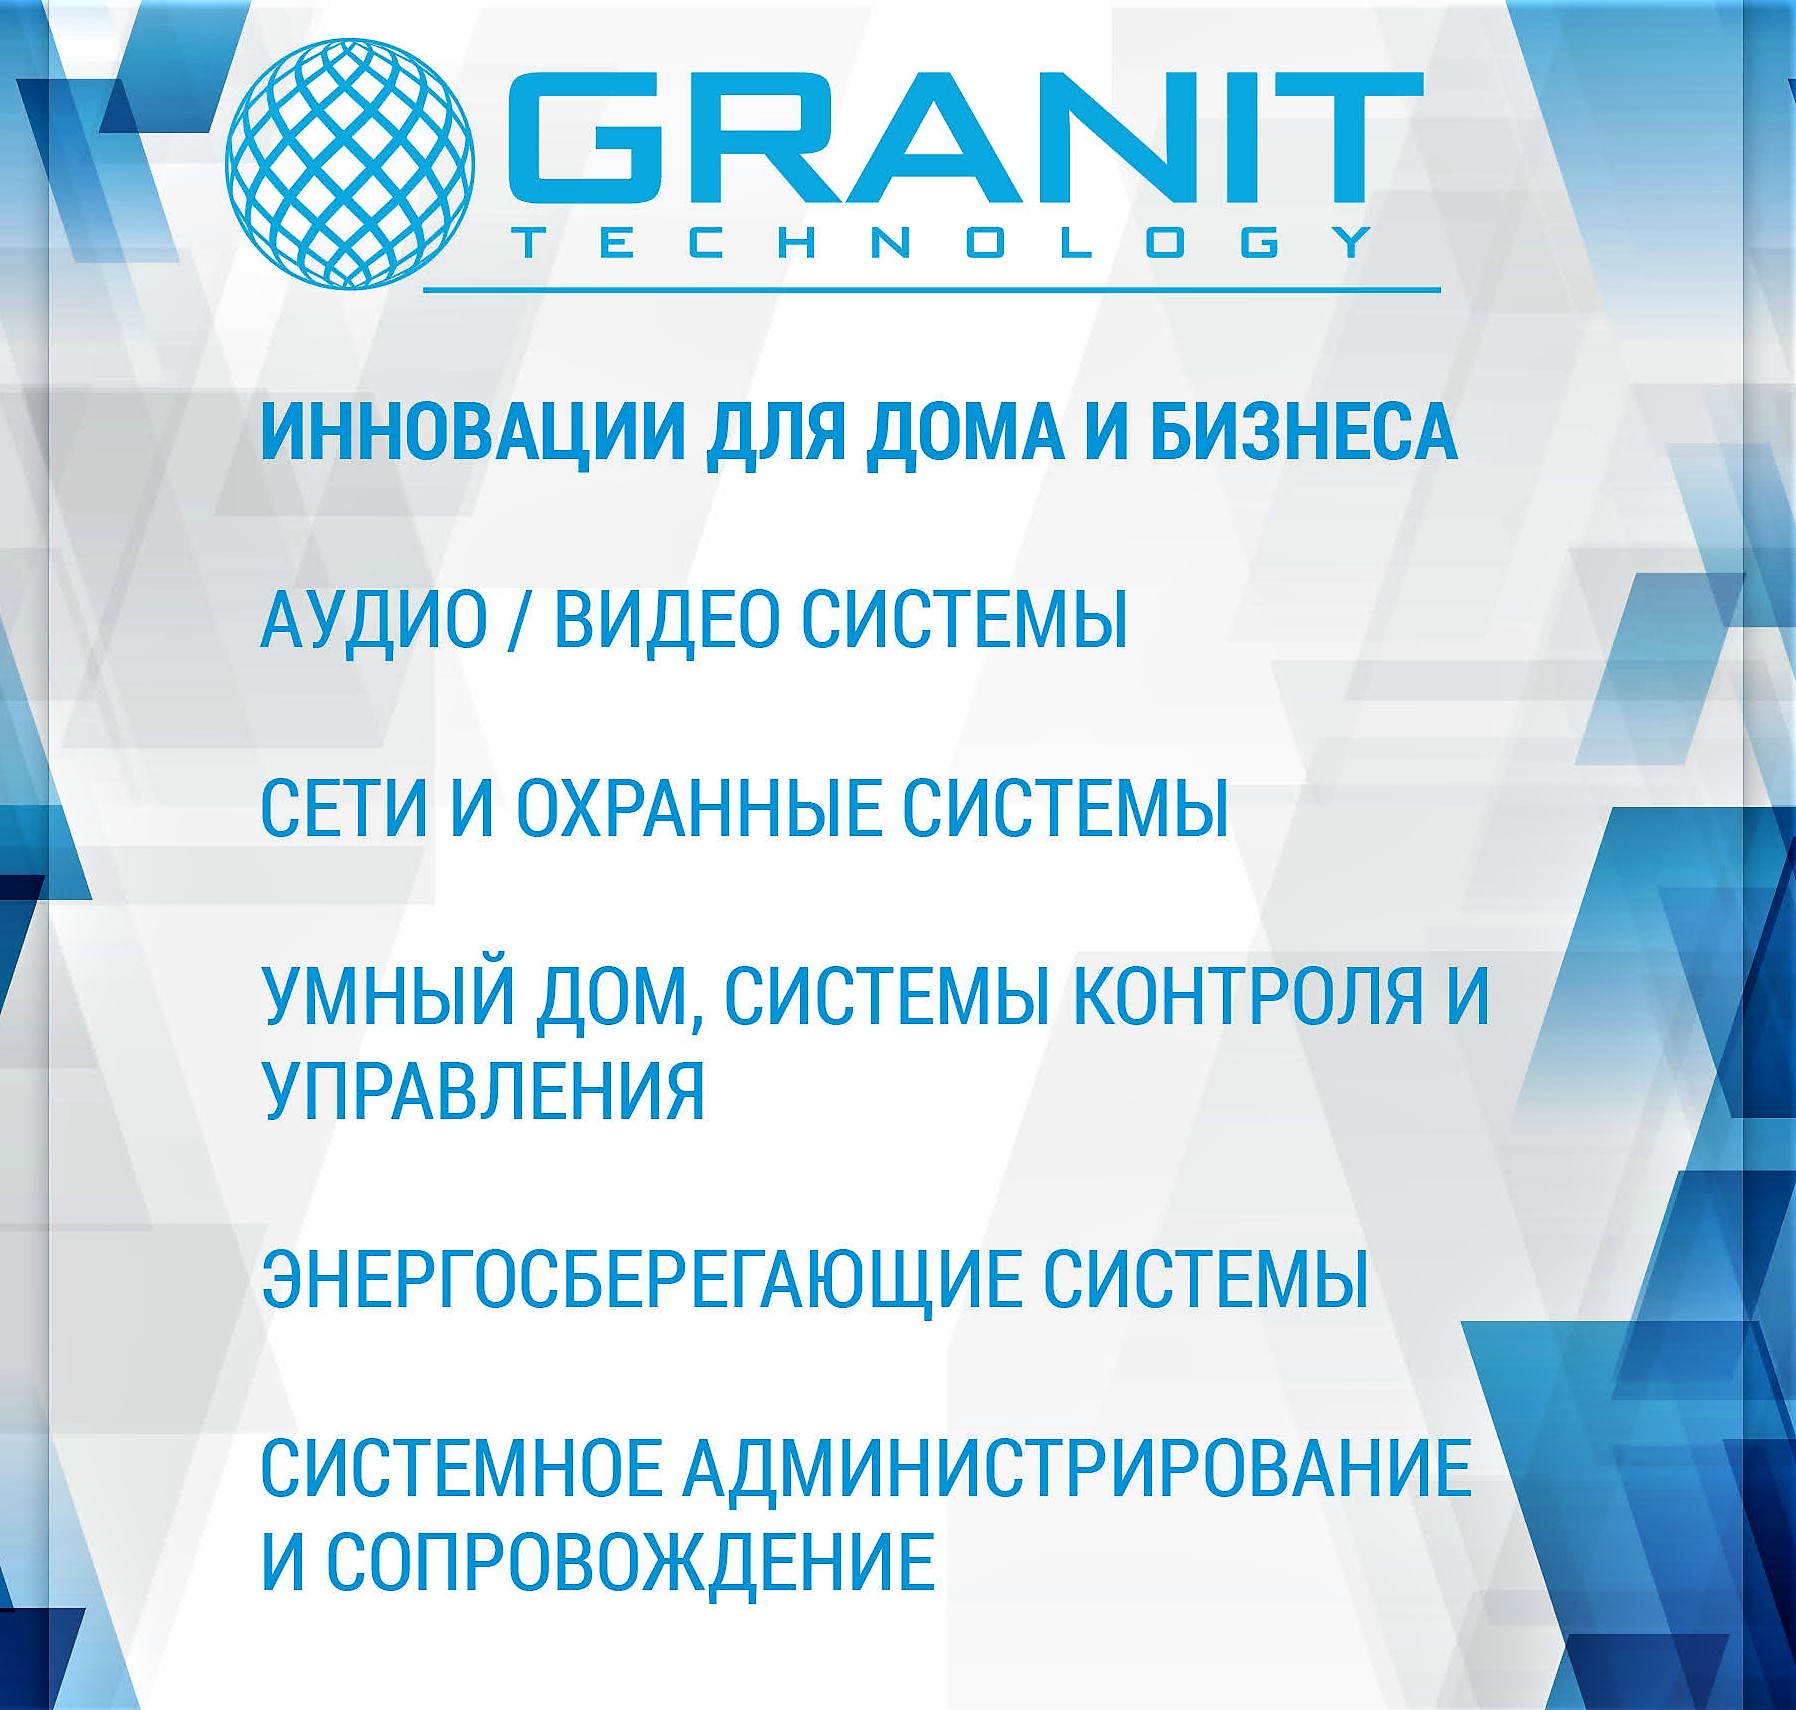 granit technology